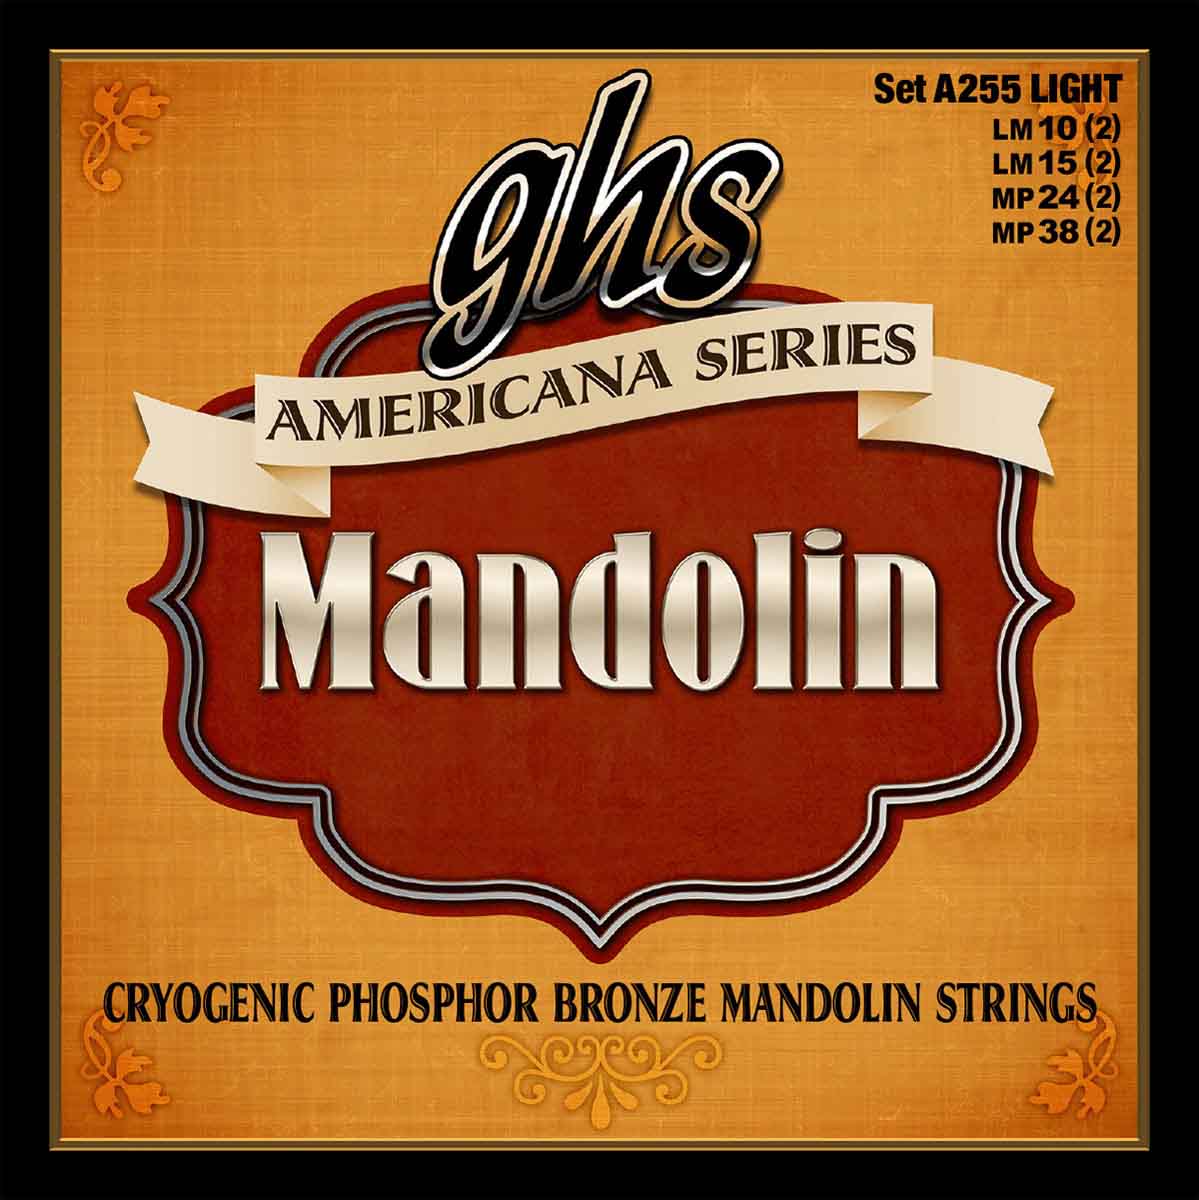 GHS MANDOLINE AMERICANA LIGHT 10-15-24-38